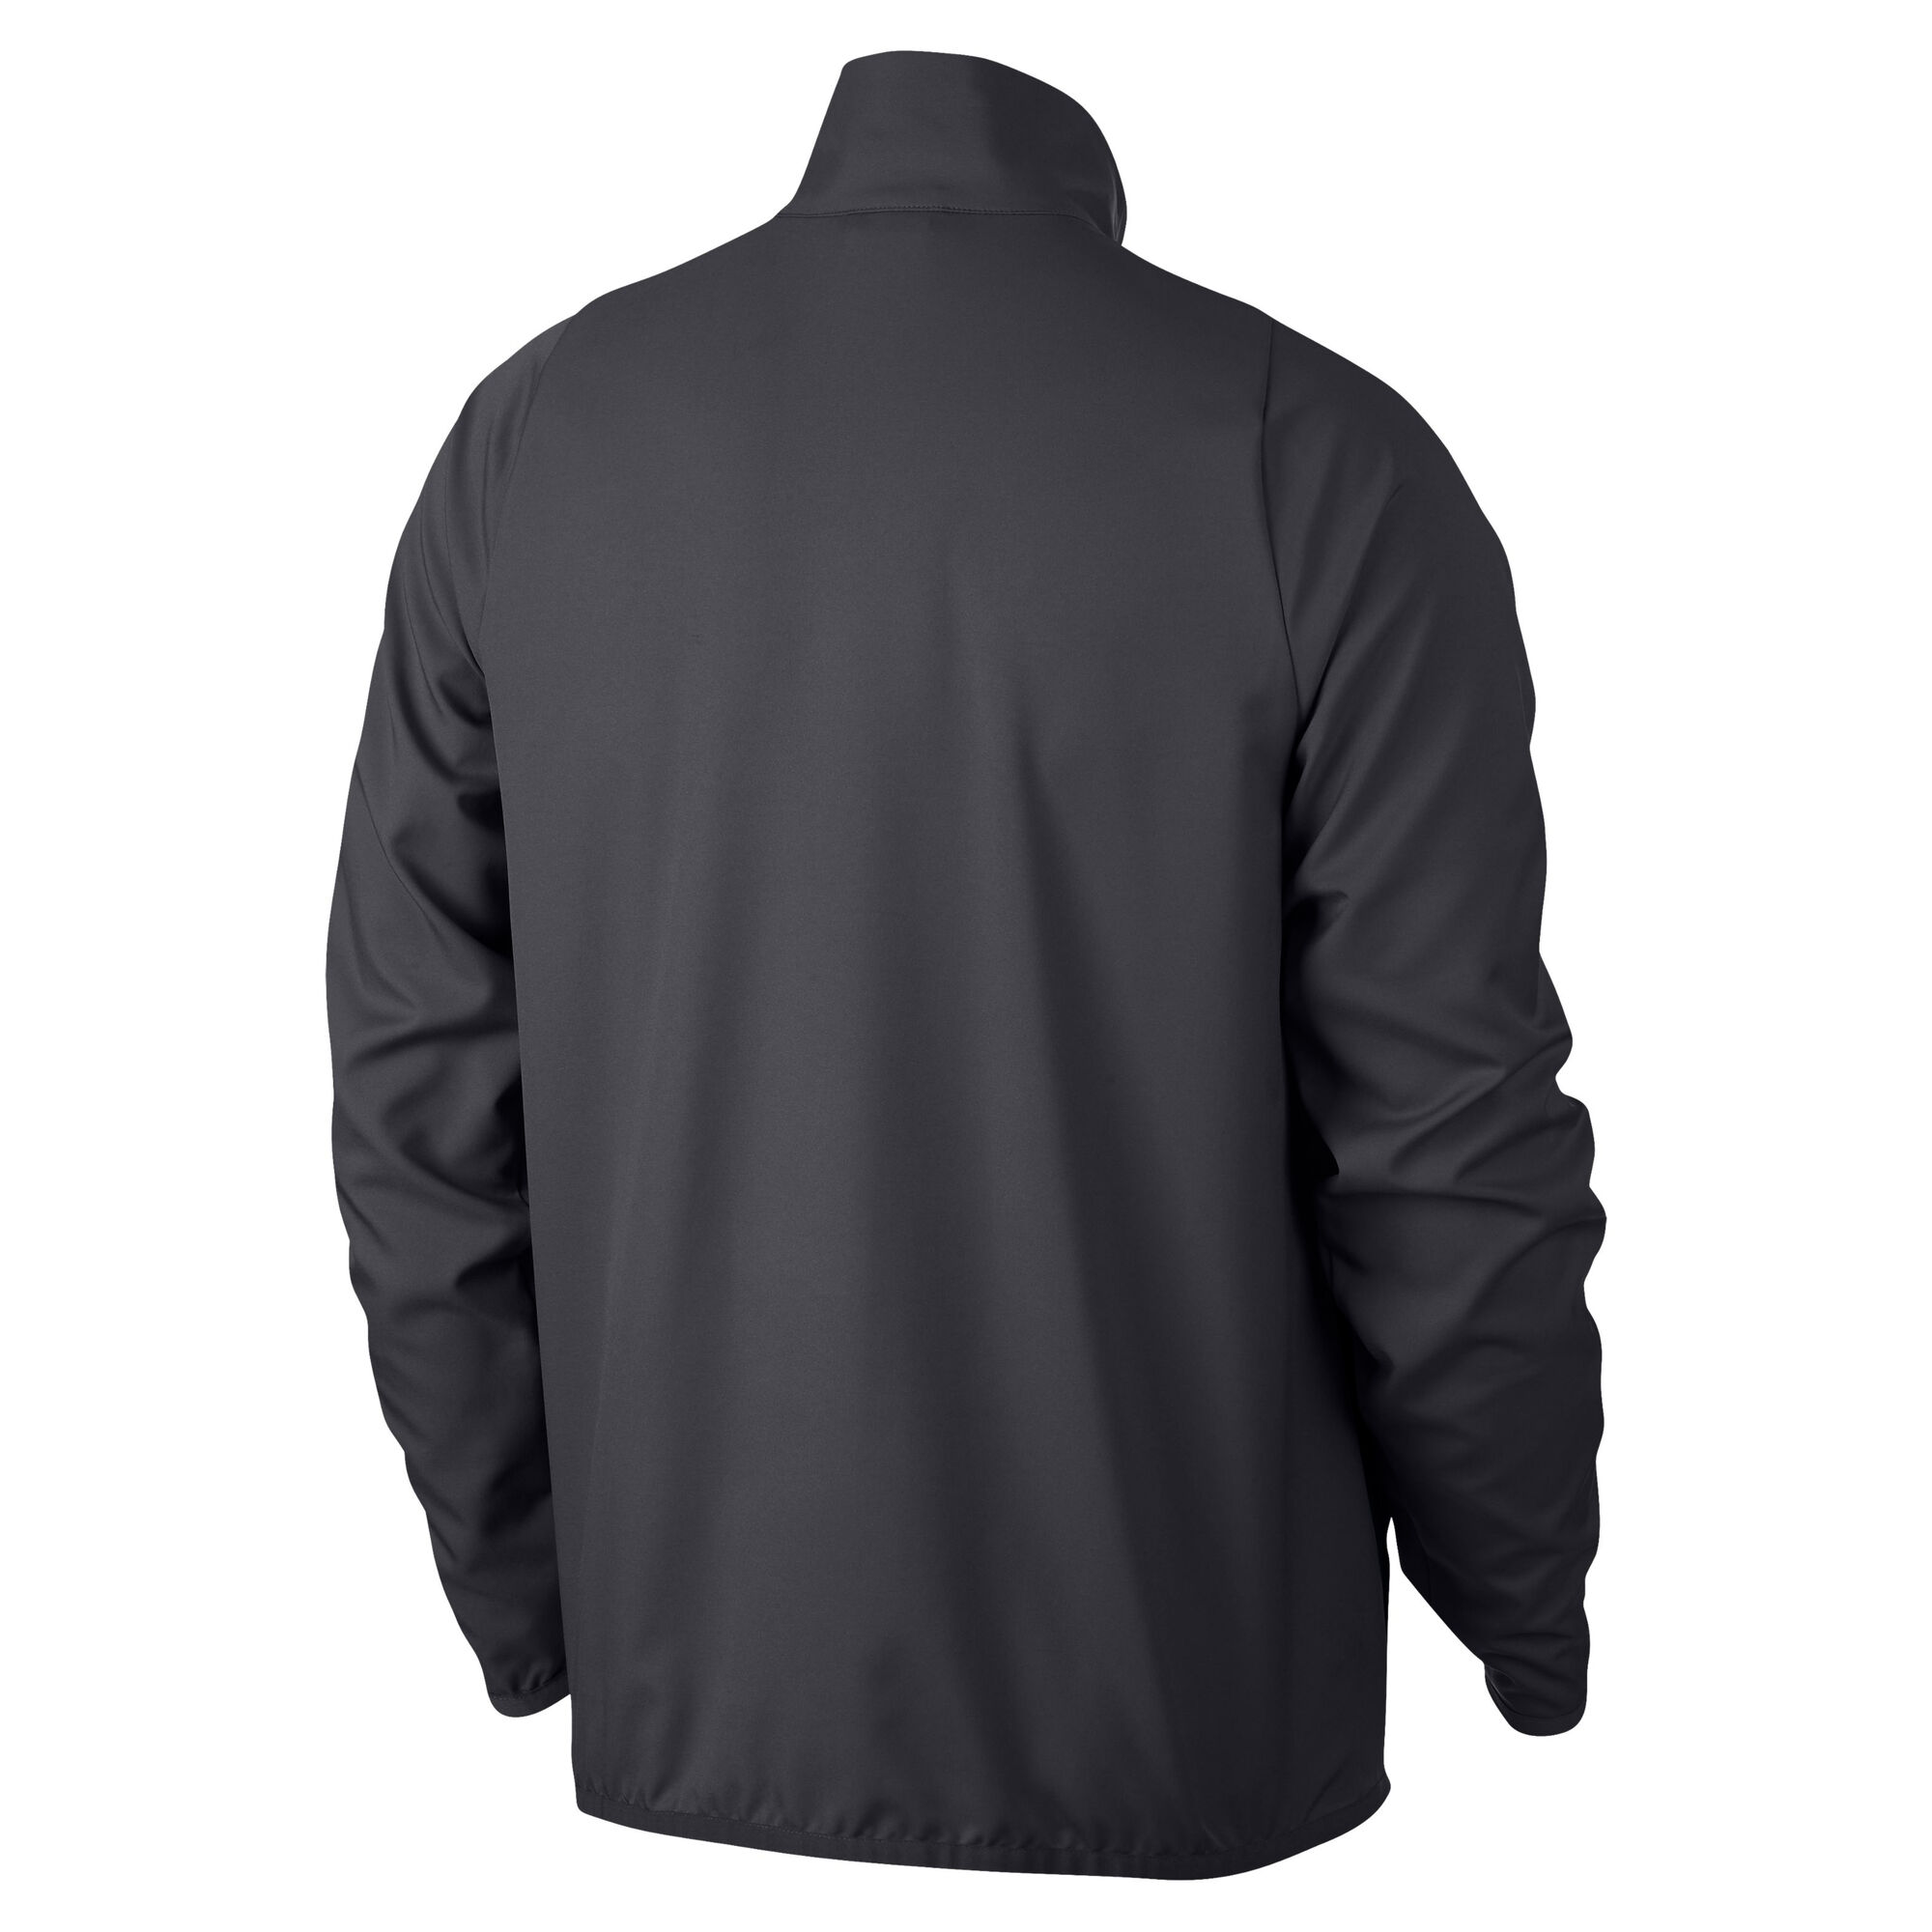 buy Nike Dry Training Jacket Men - Dark Grey, Black online | Tennis-Point